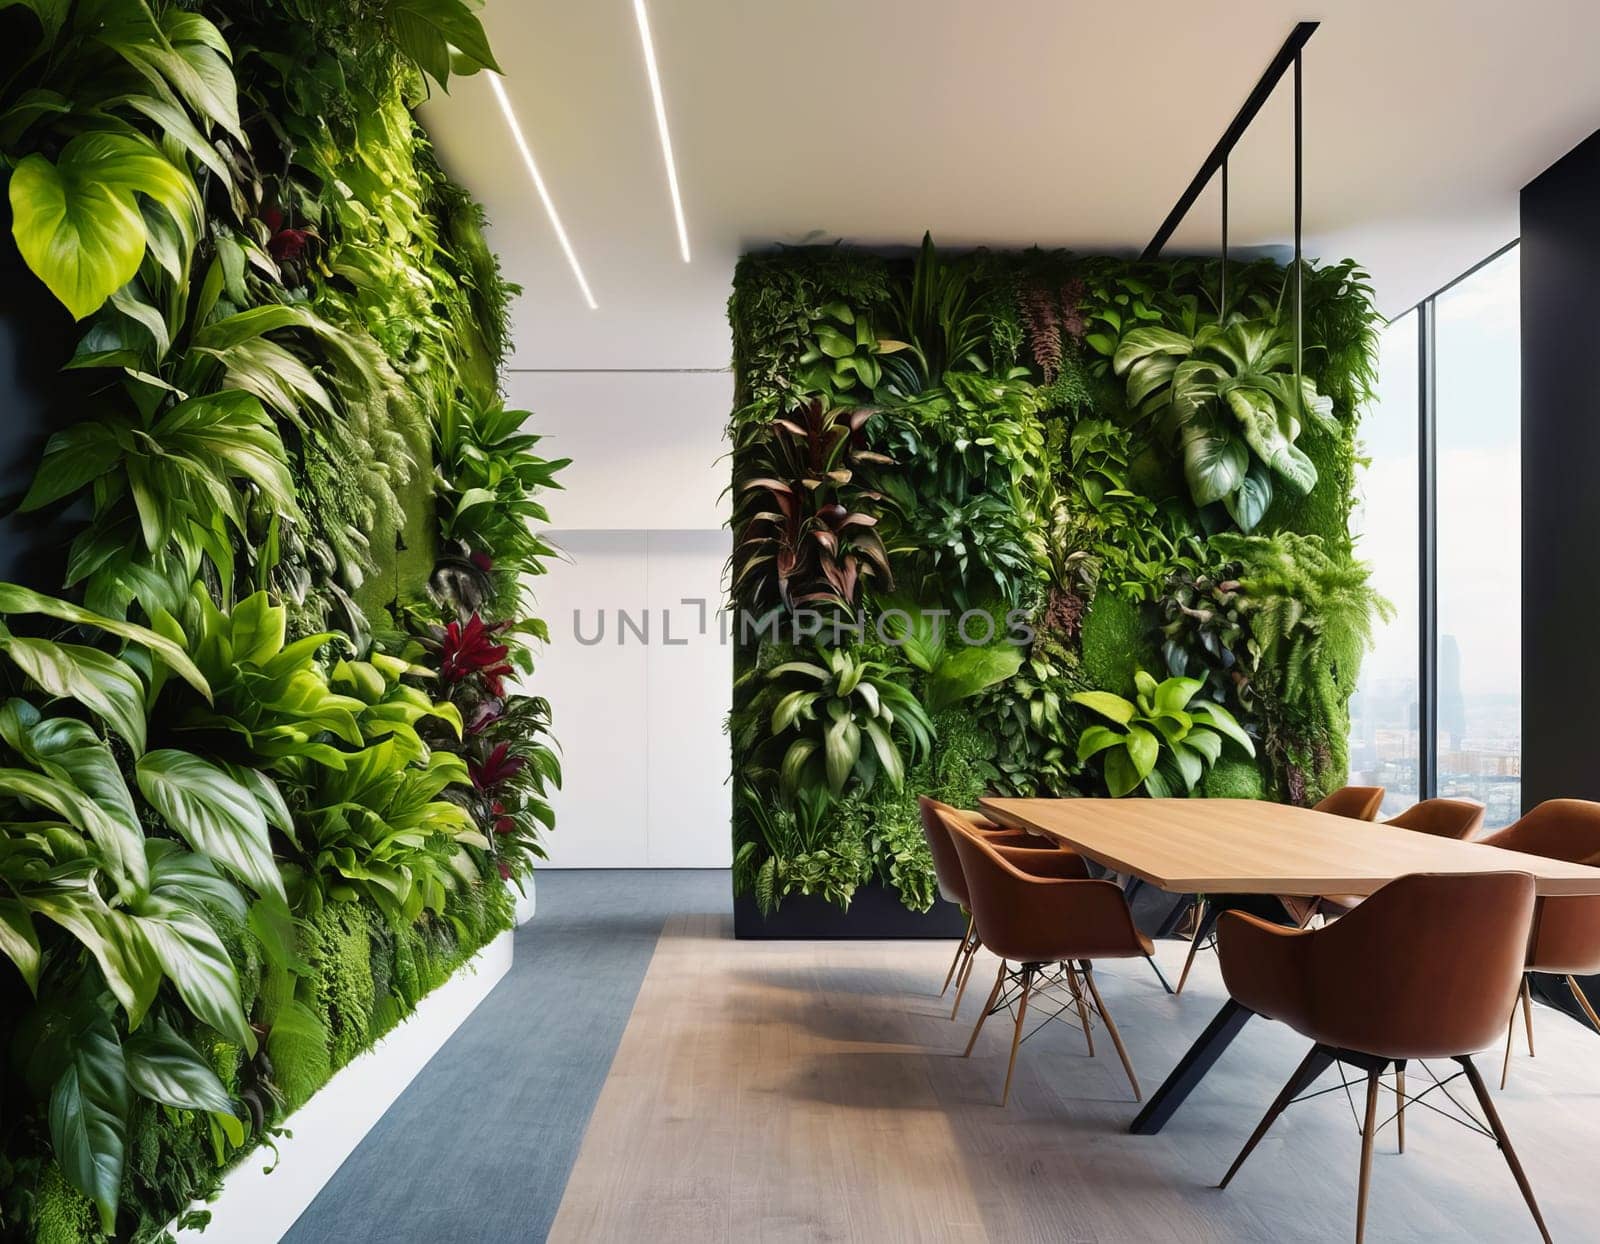 Vertical garden indoors. Living green wall in modern office interior by fascinadora